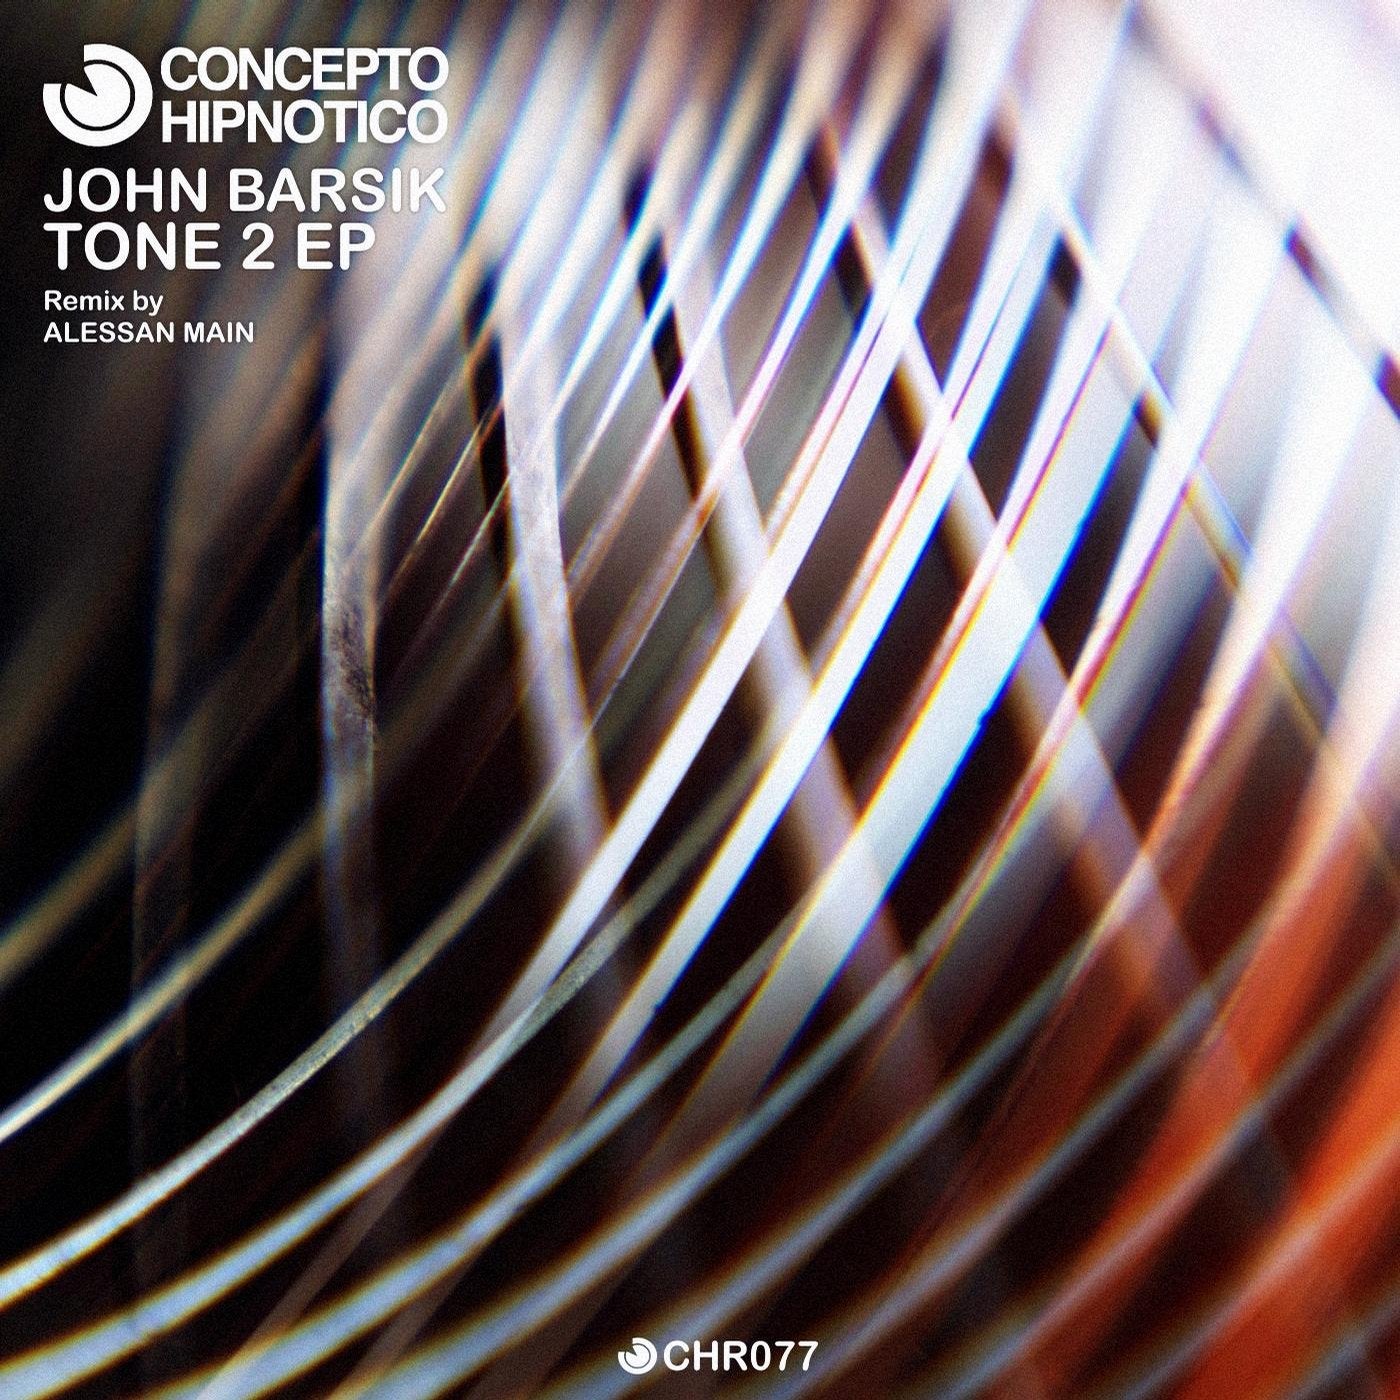 Tone 2 EP